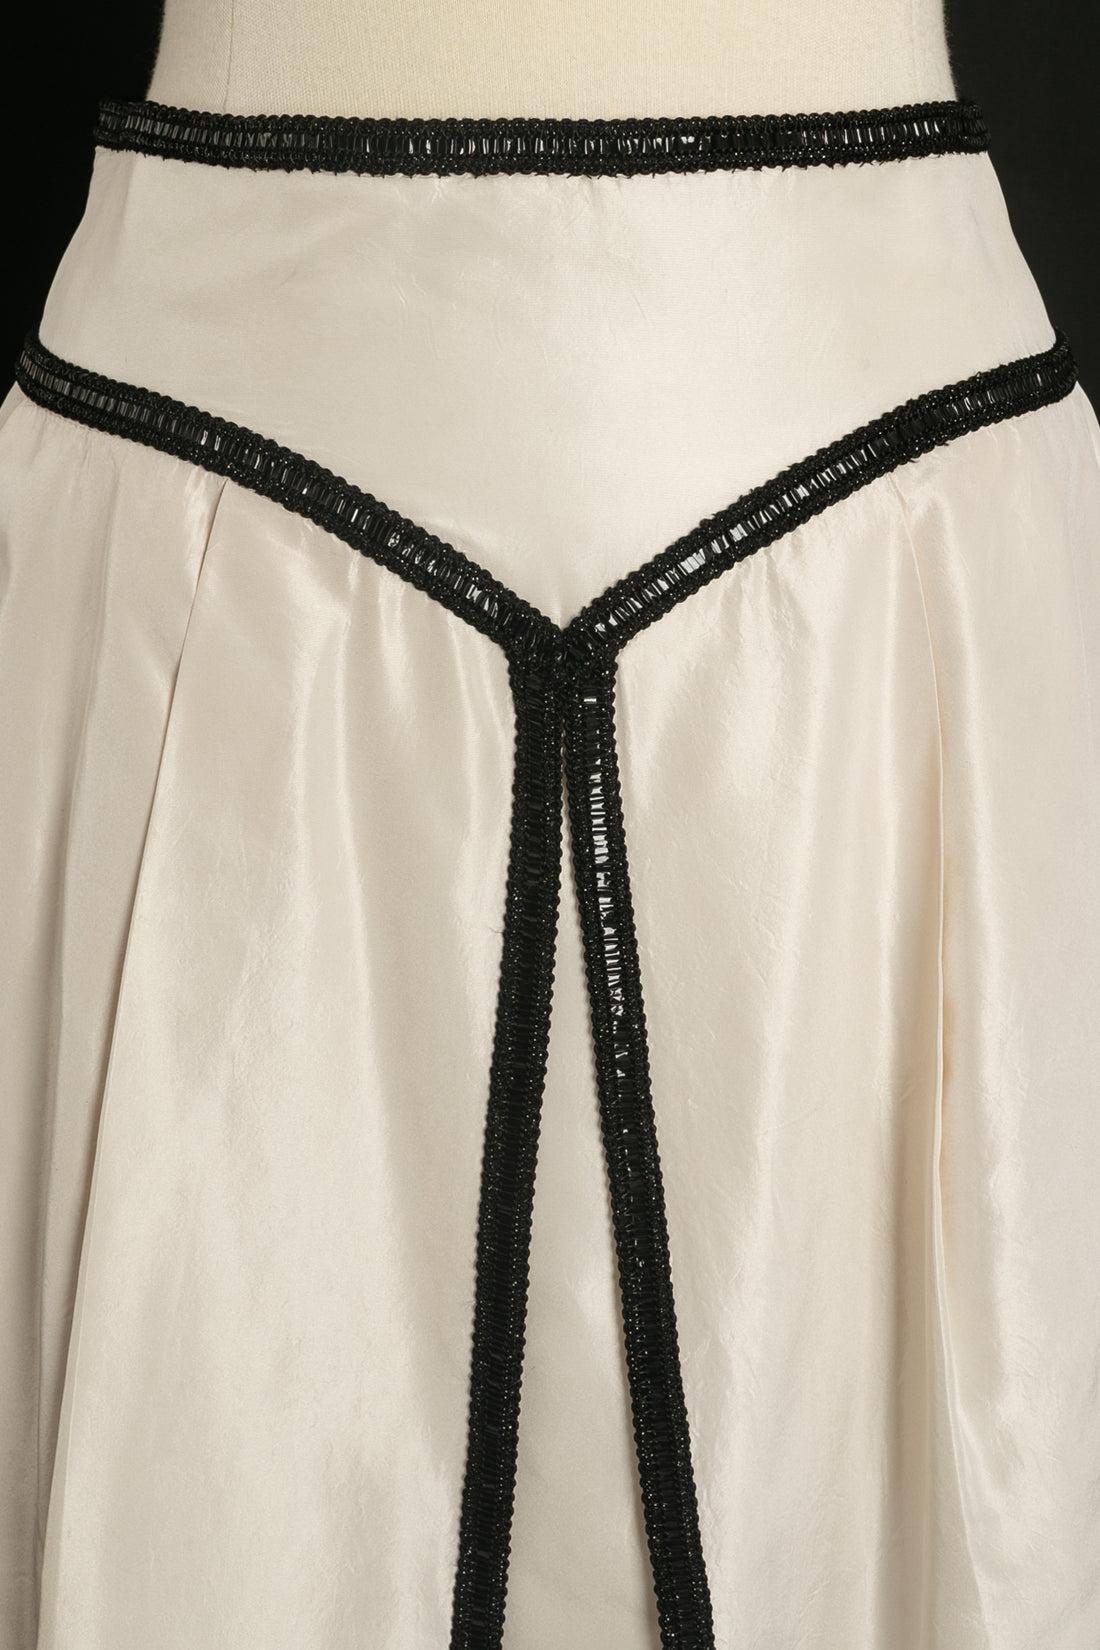 Loris Azzaro Taffeta Bustier and Skirt Set For Sale 10